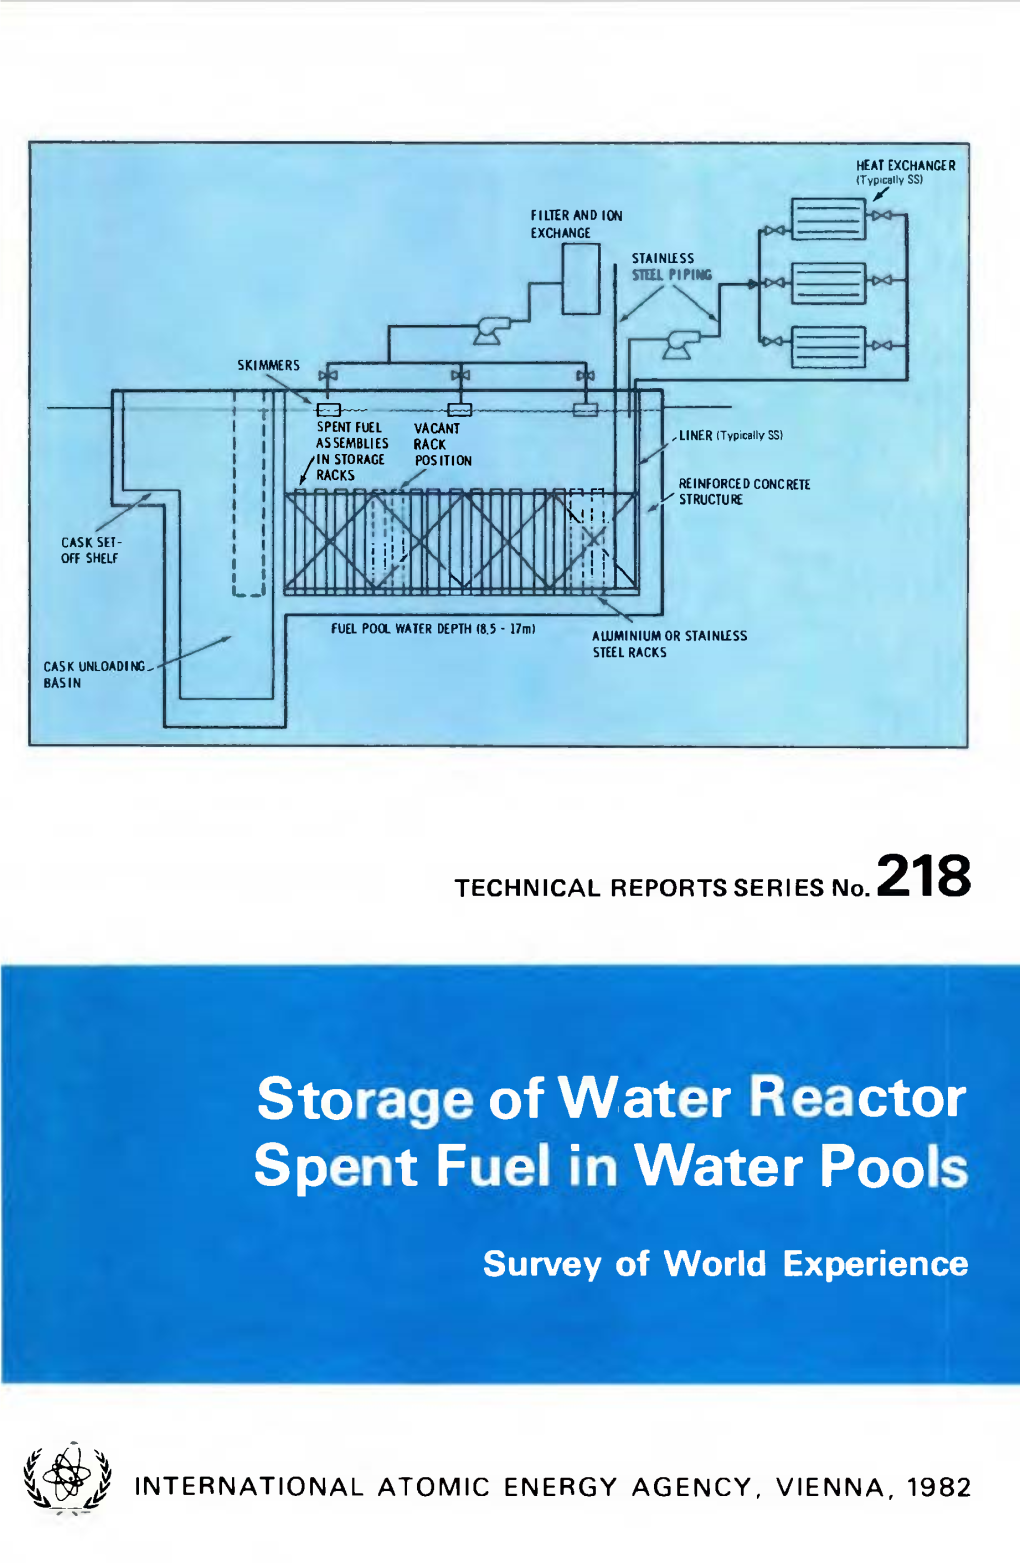 Storage of Water Reactor Spent Fuel in Water Pools